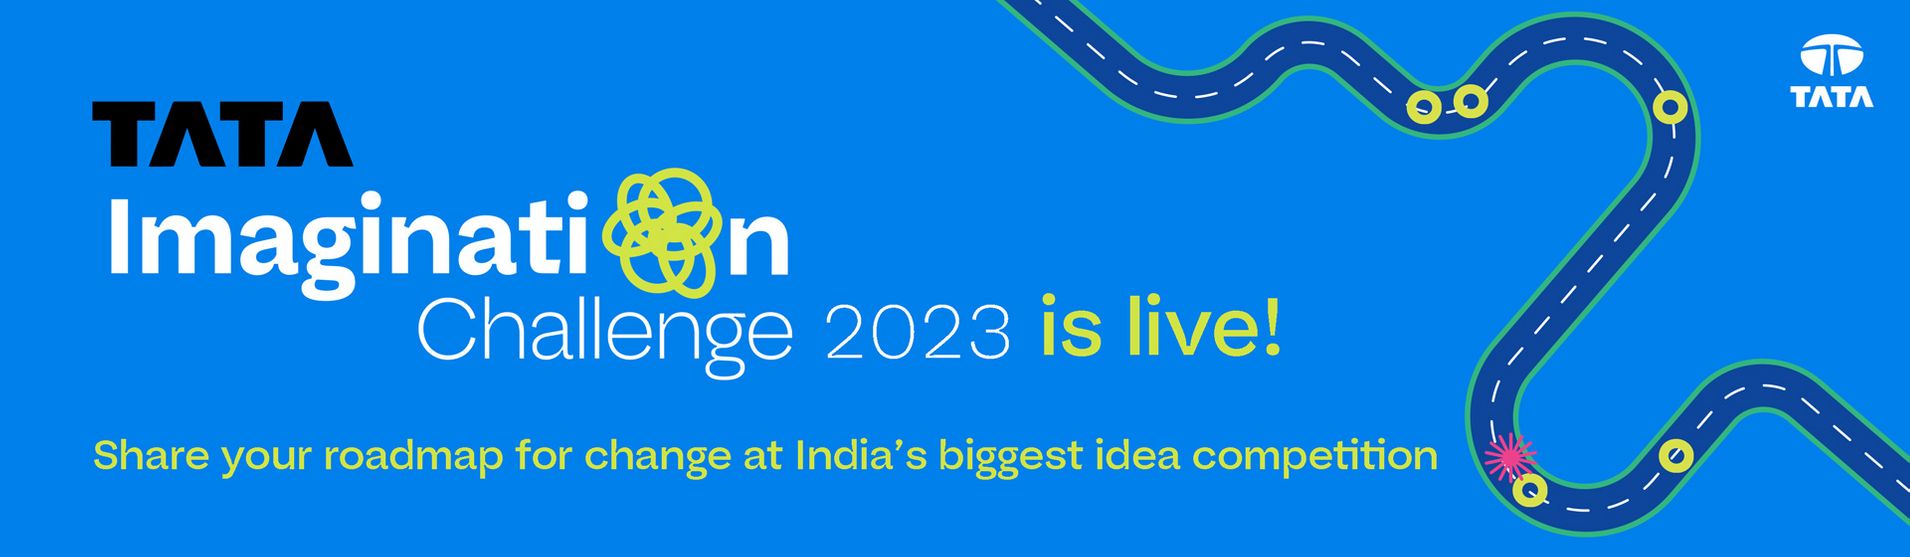 Tata Imagination Challenge 2023 Referral Leaderboard